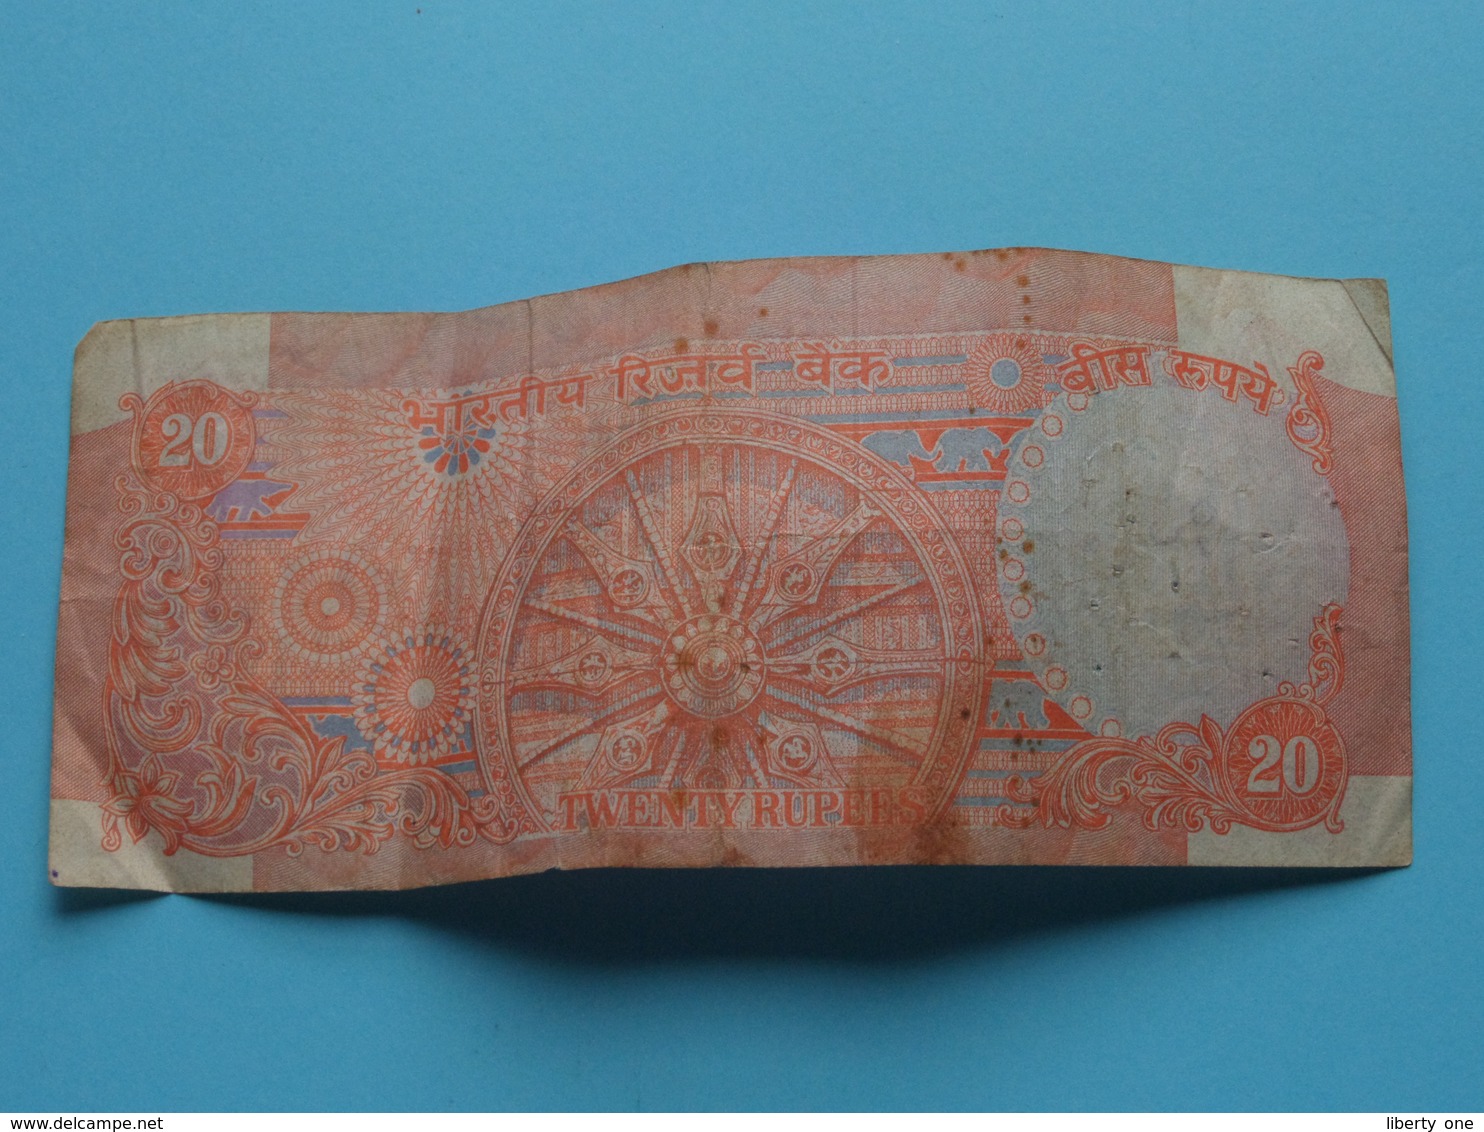 20 ( Twenty ) RUPEES : 47K 962564 ( Reserve Bank Of India ) ! - India